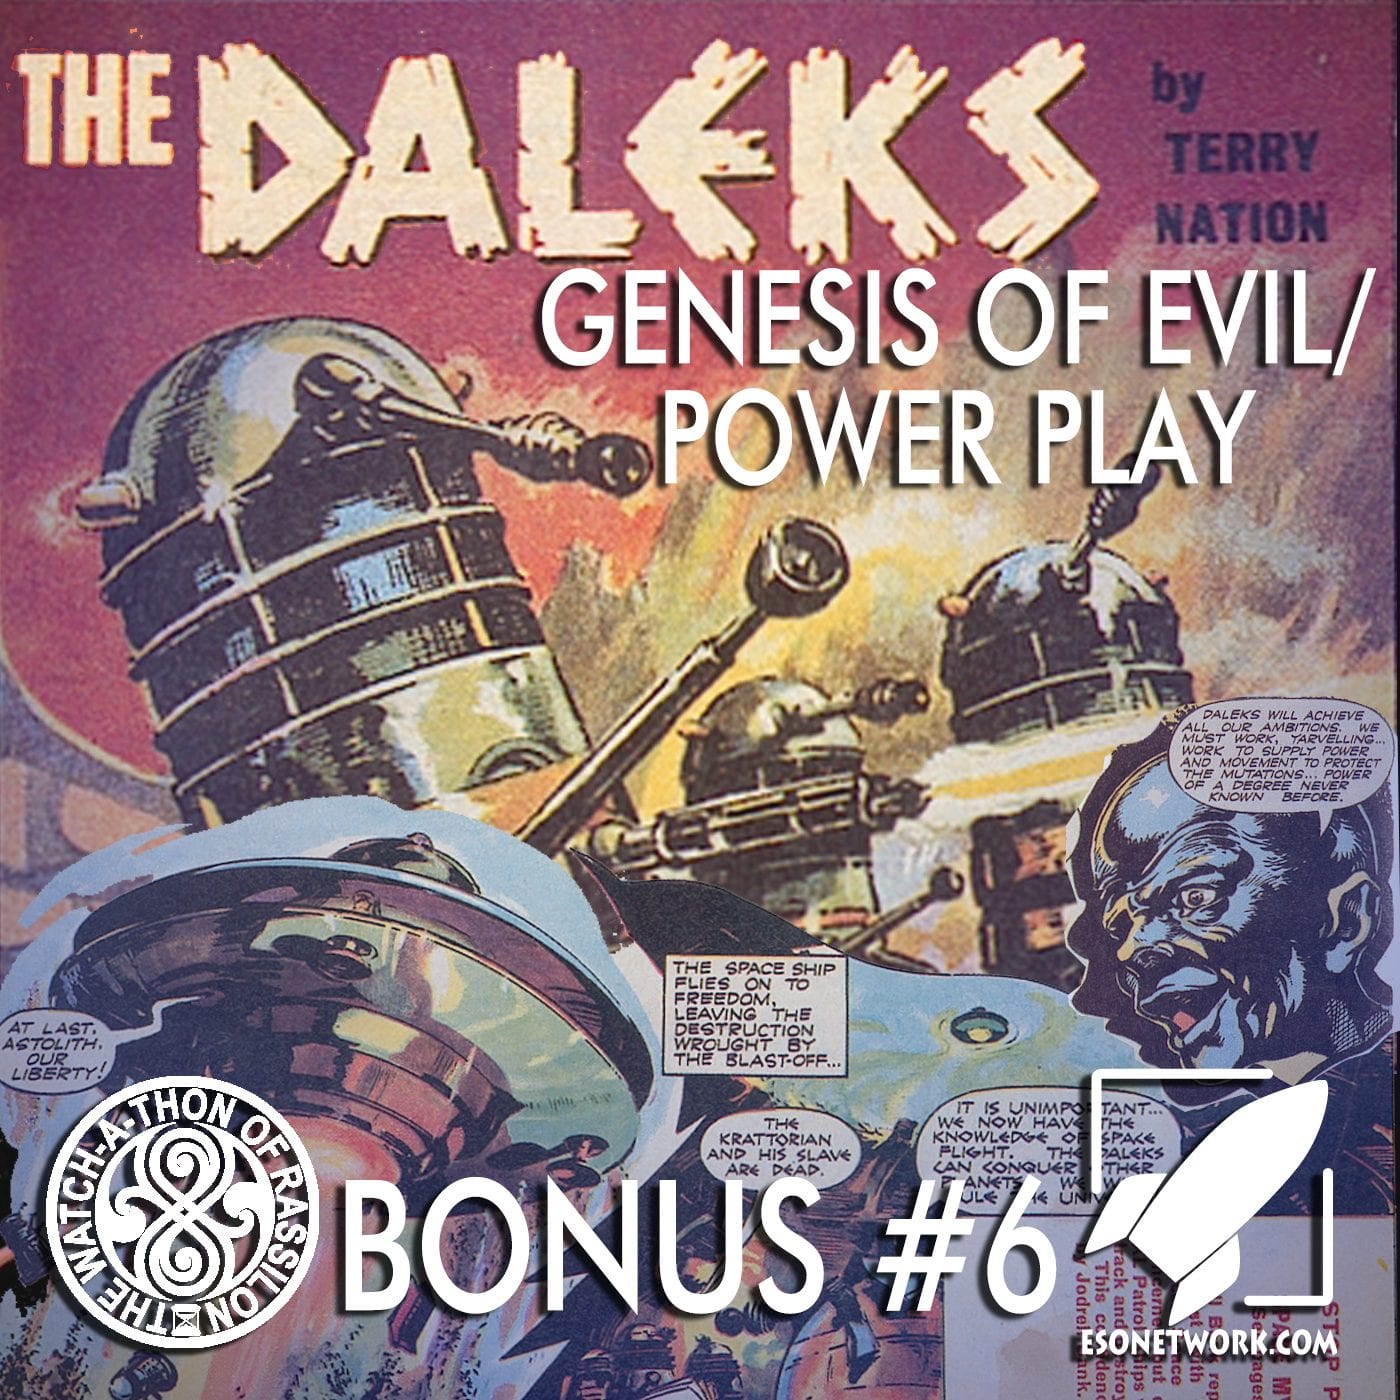 The Daleks Genesis of Evil